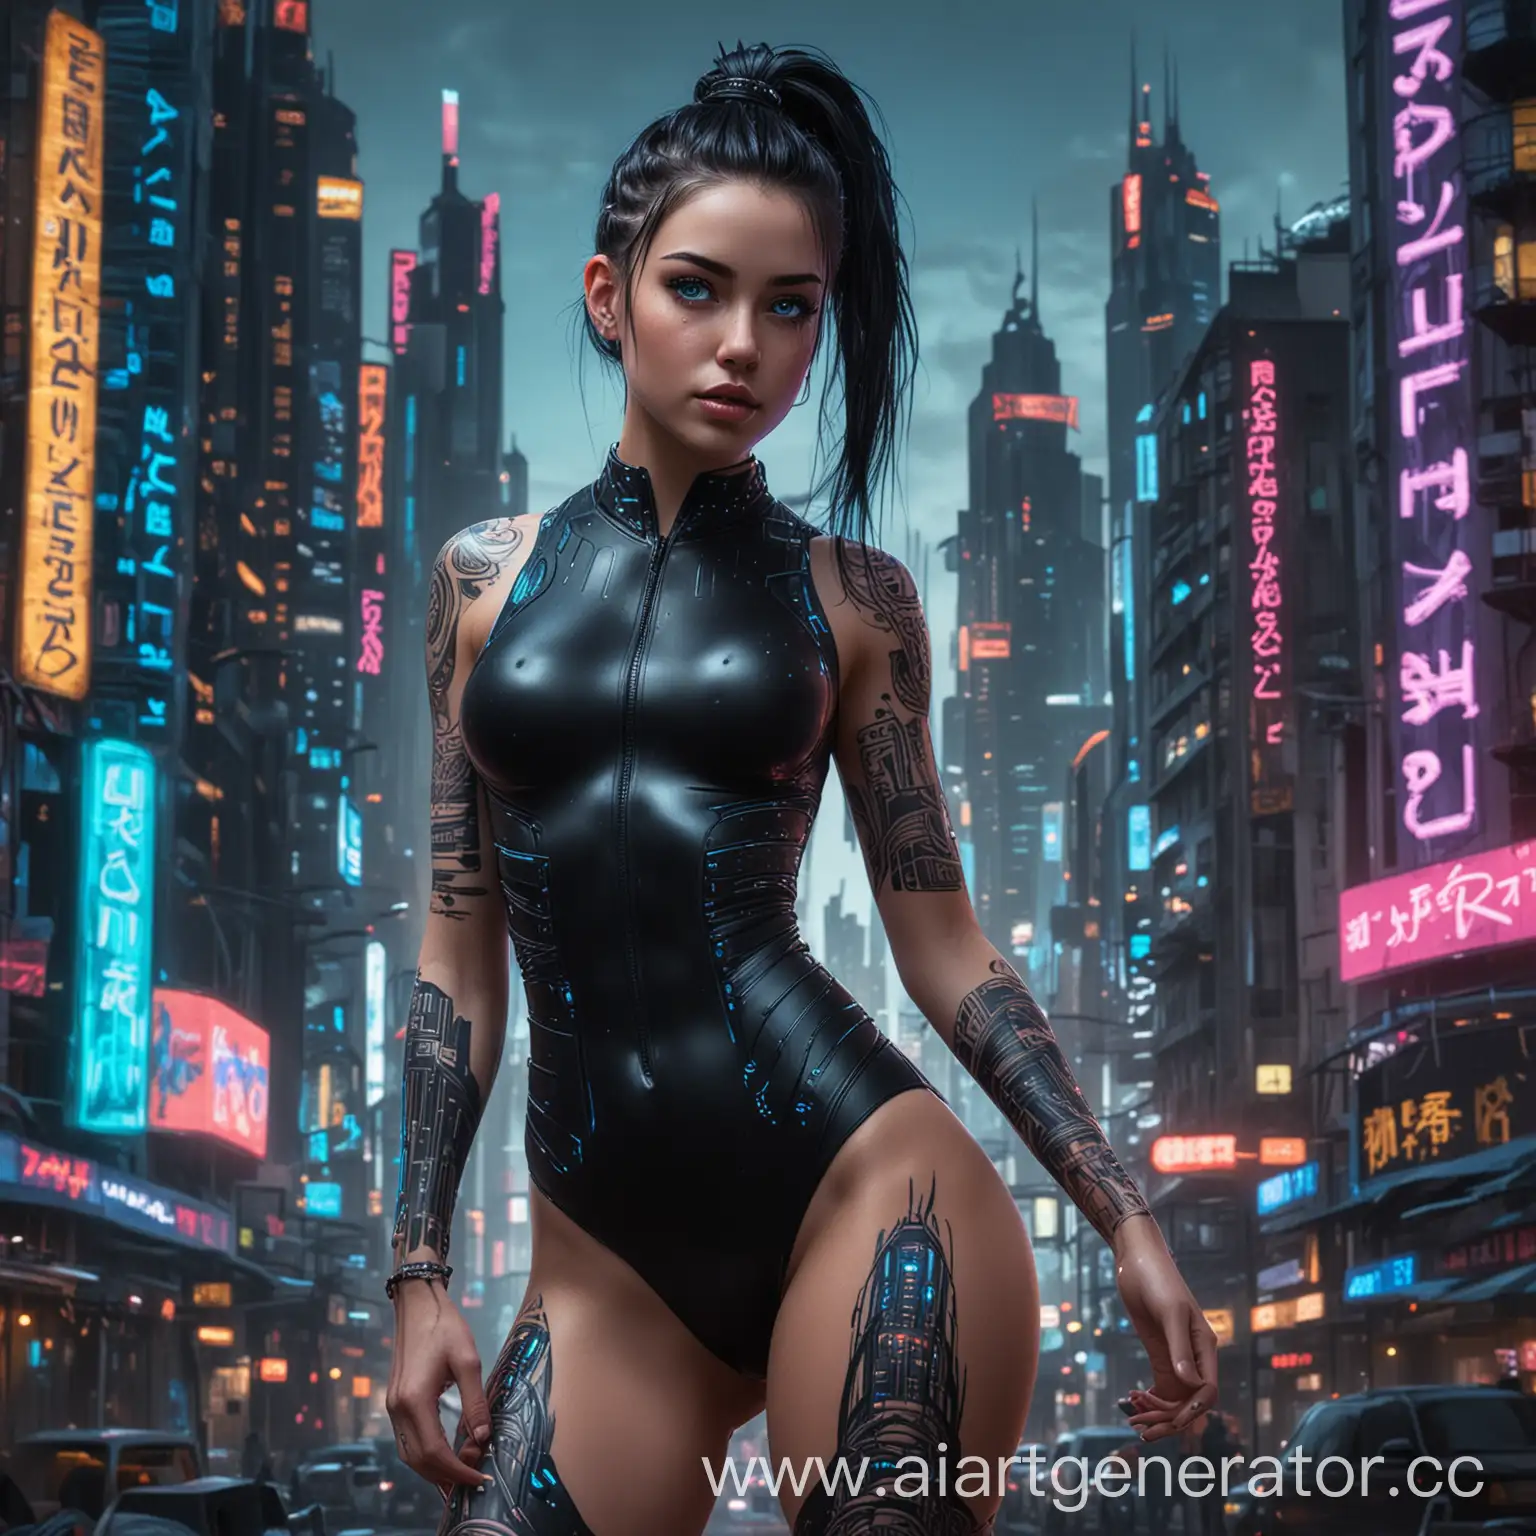 Cyberpunk-Woman-with-Glowing-Tattoos-in-Futuristic-City